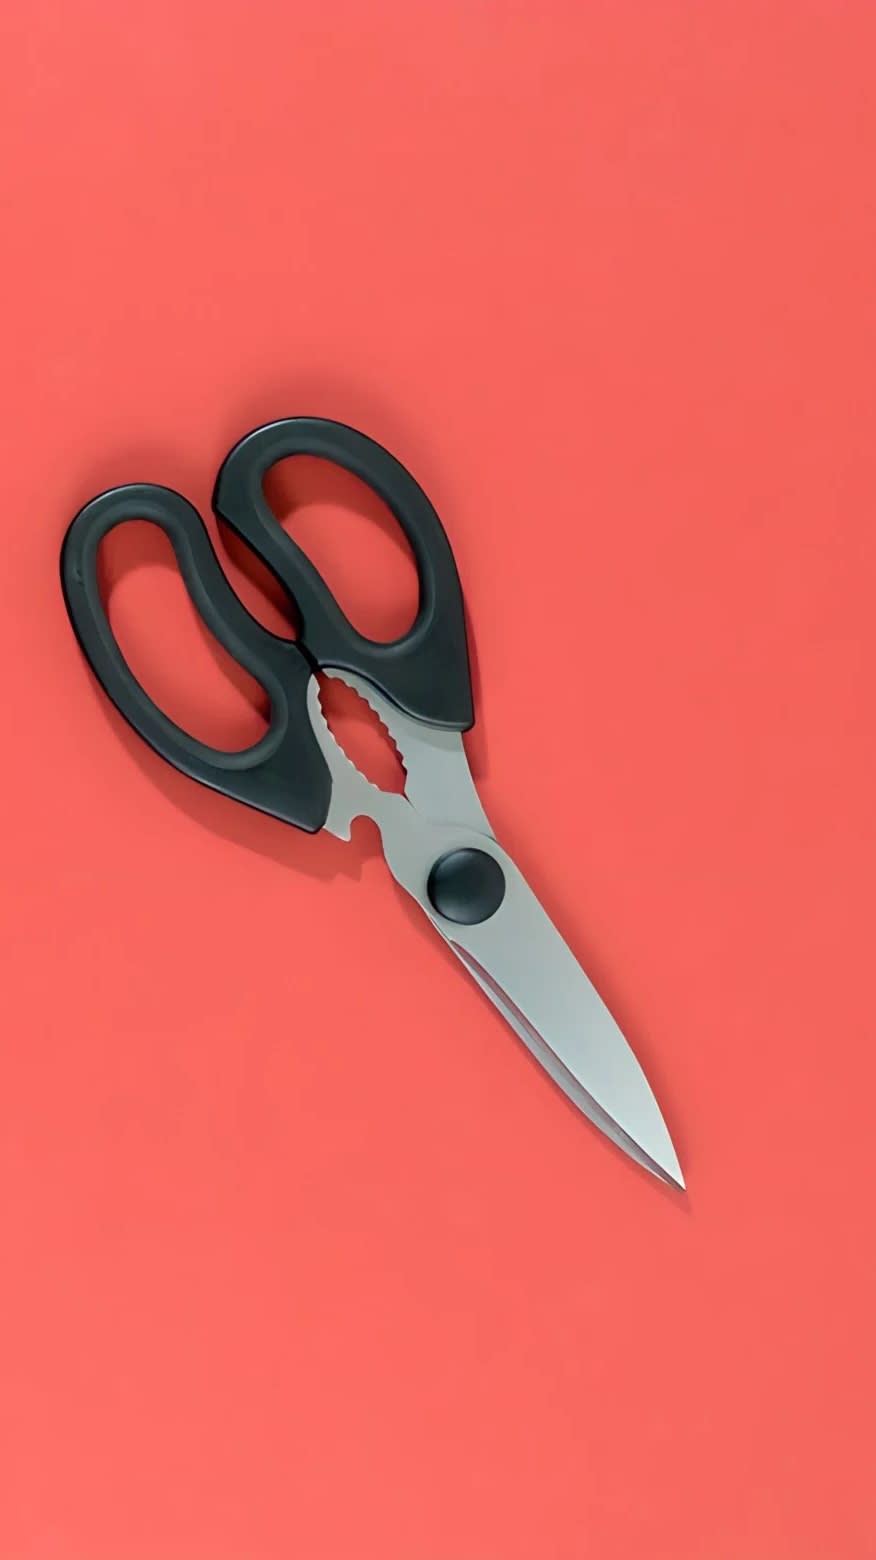 A pair of kitchen scissors